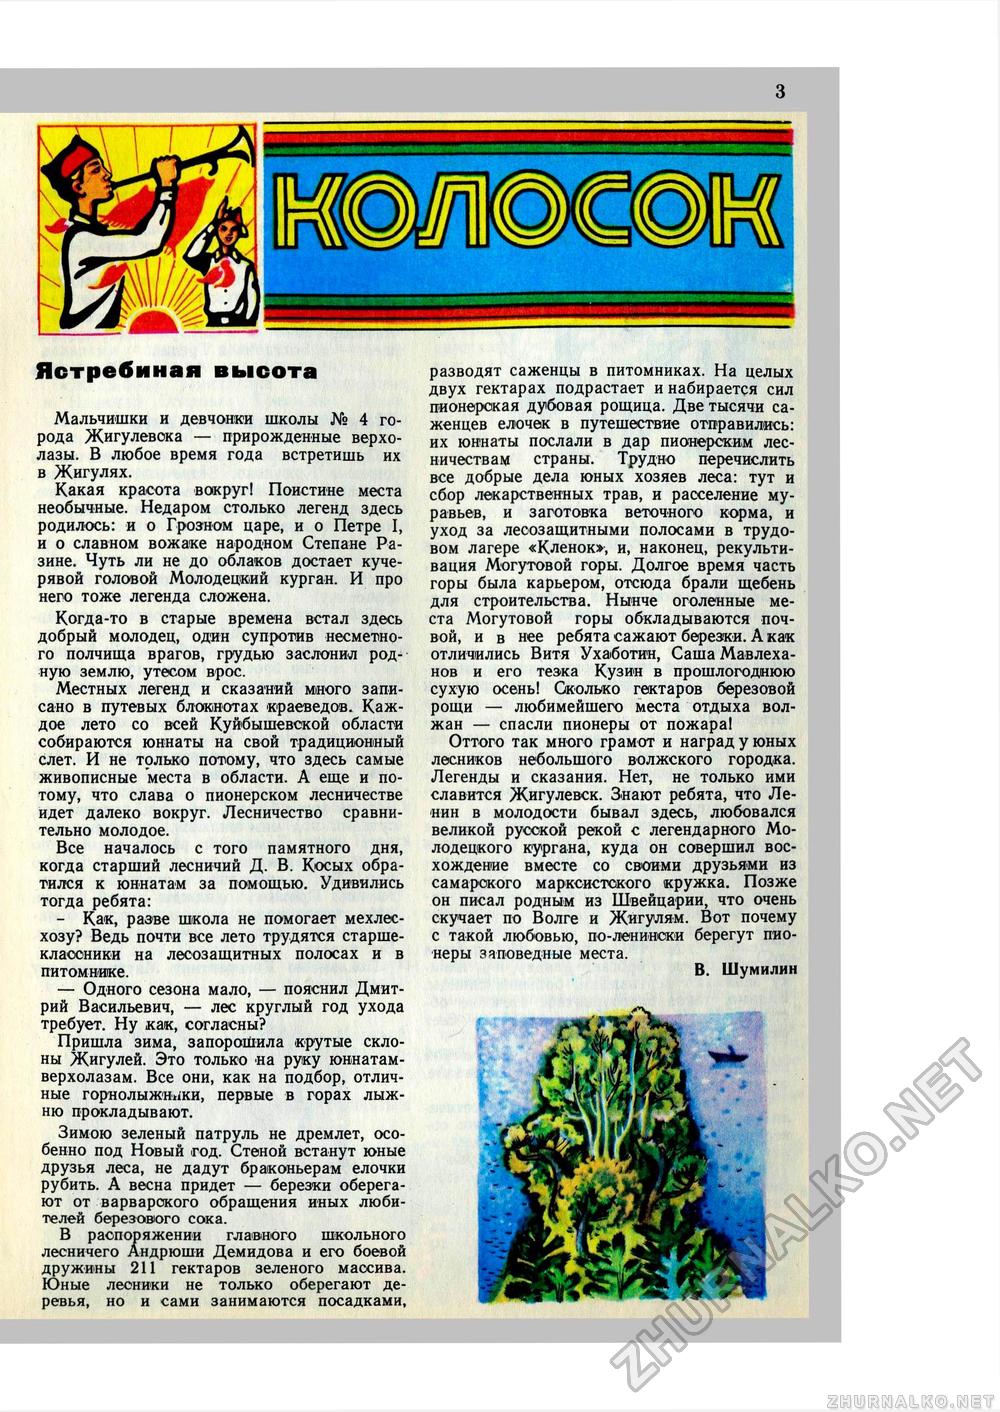 Юный Натуралист 1979-03, страница 5